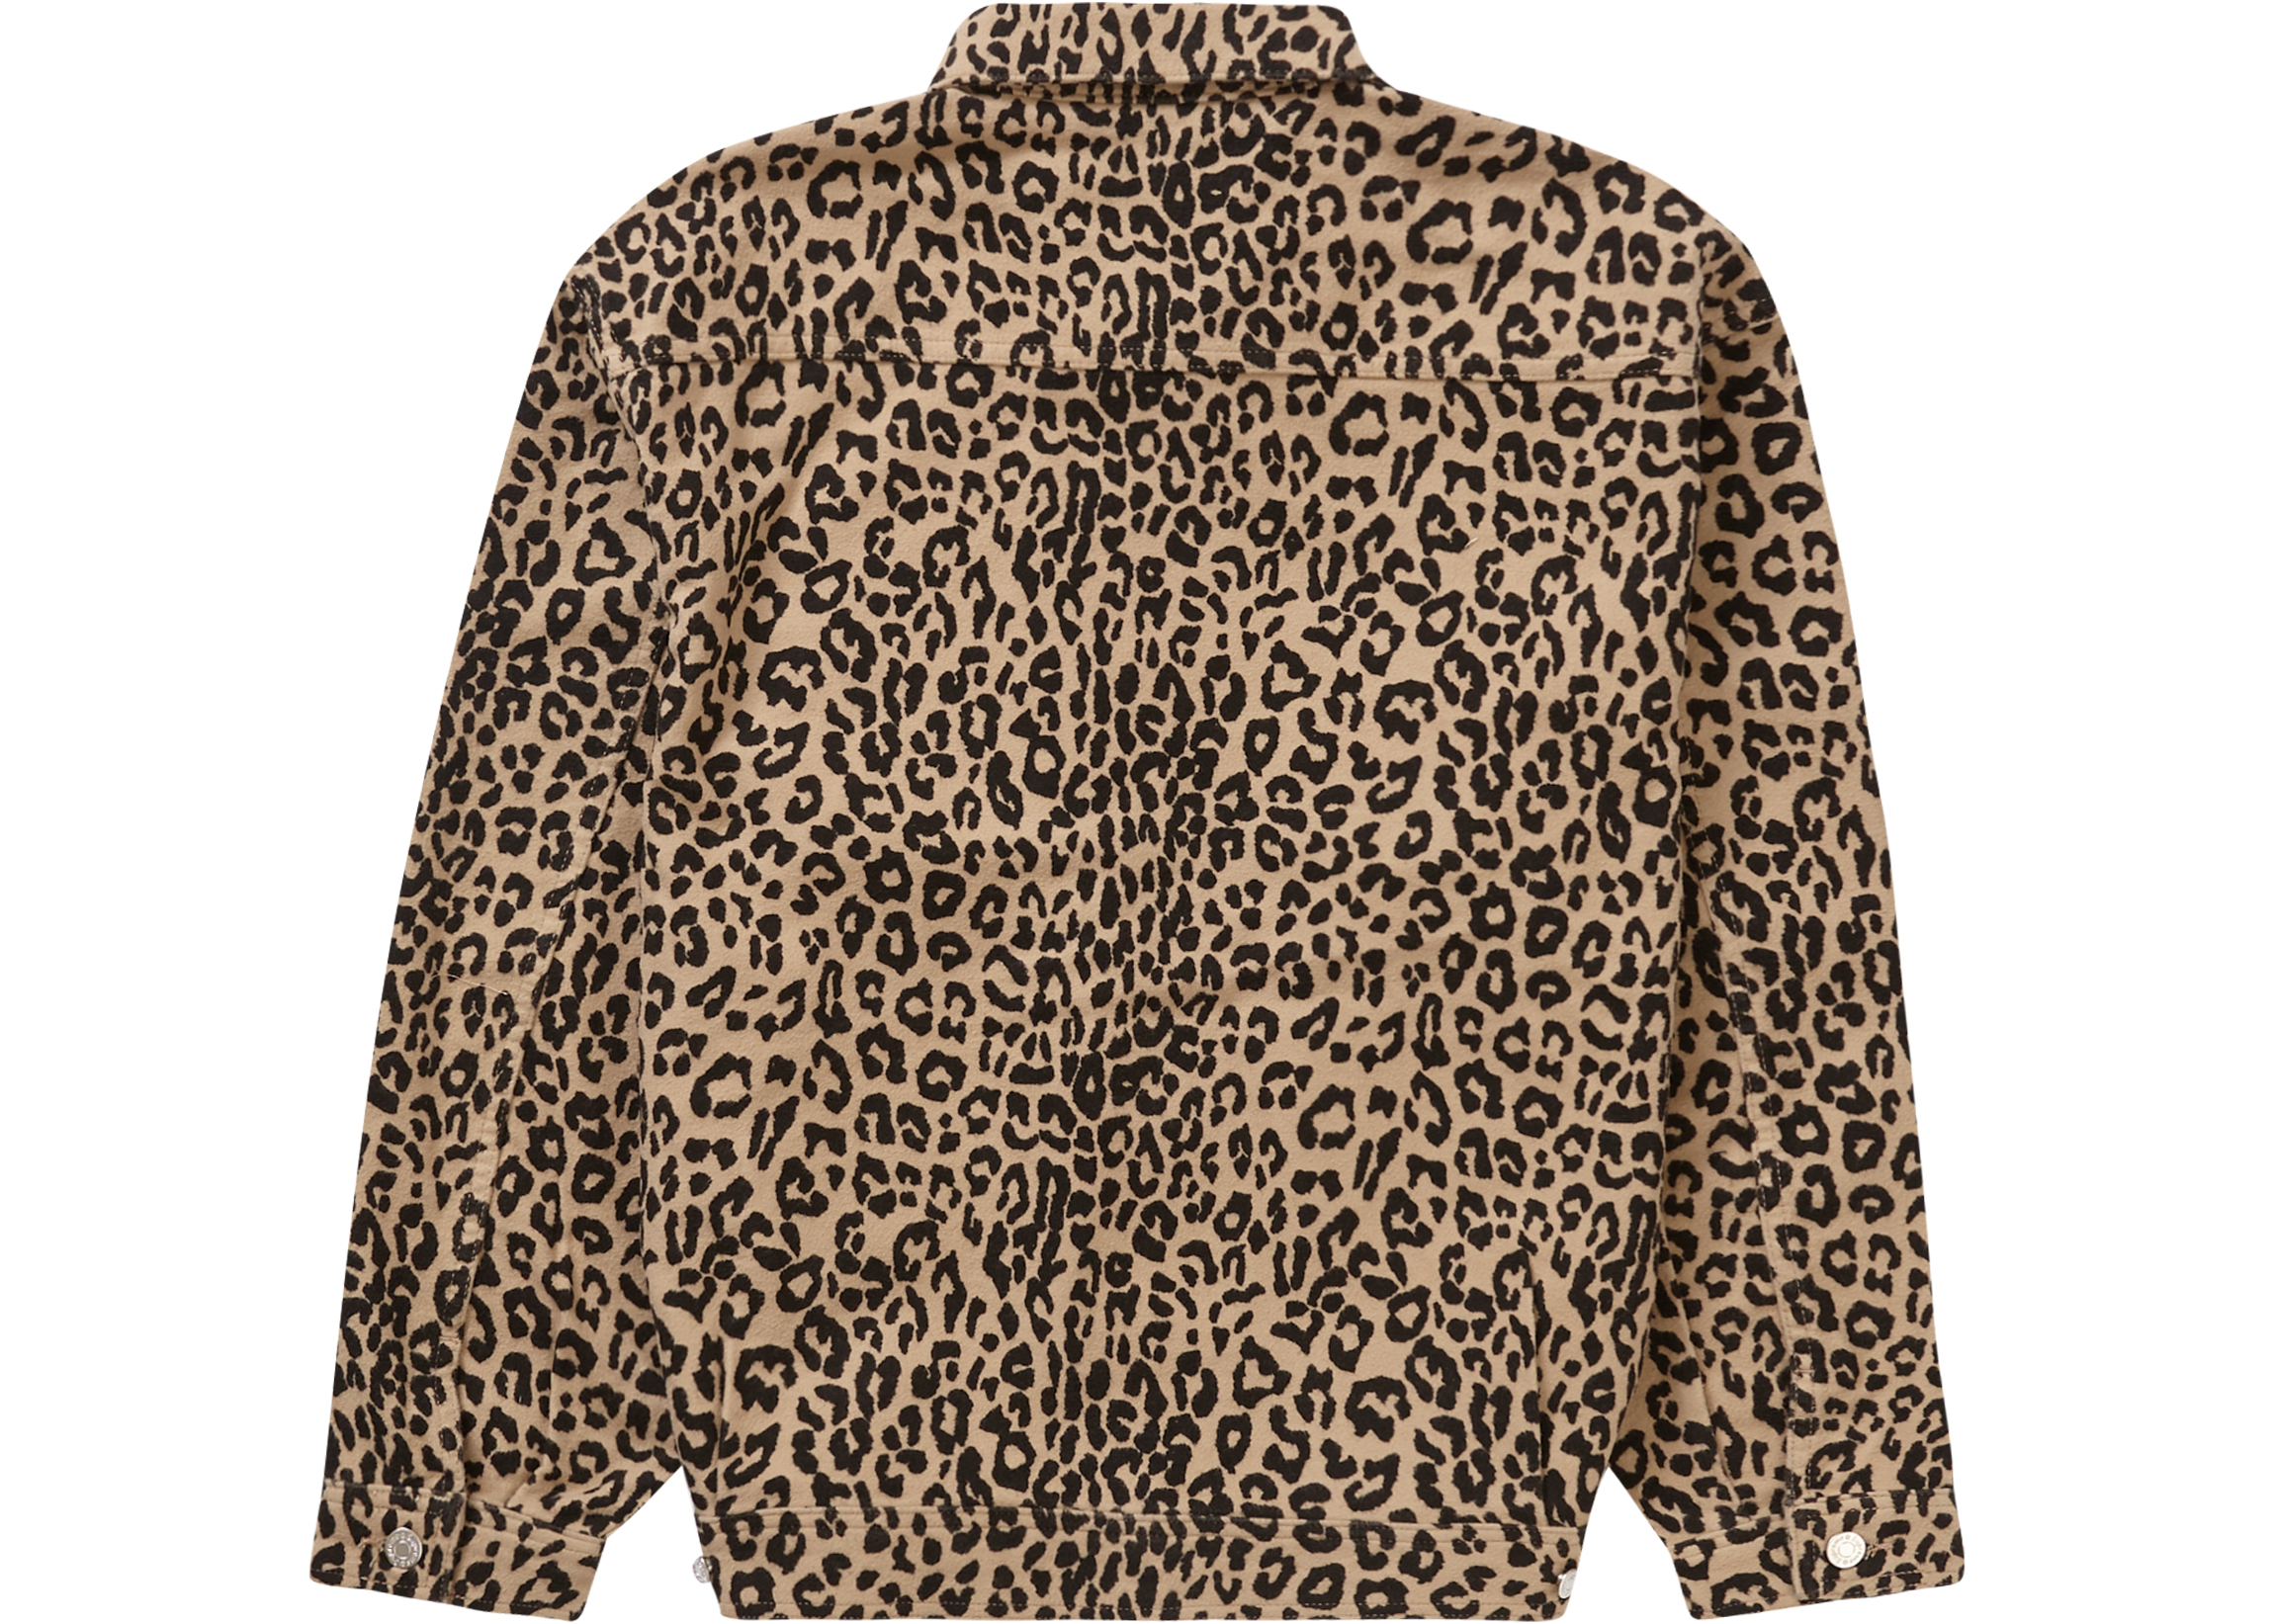 Supreme Moleskin Work jacket leopardステッカー2枚お付けします